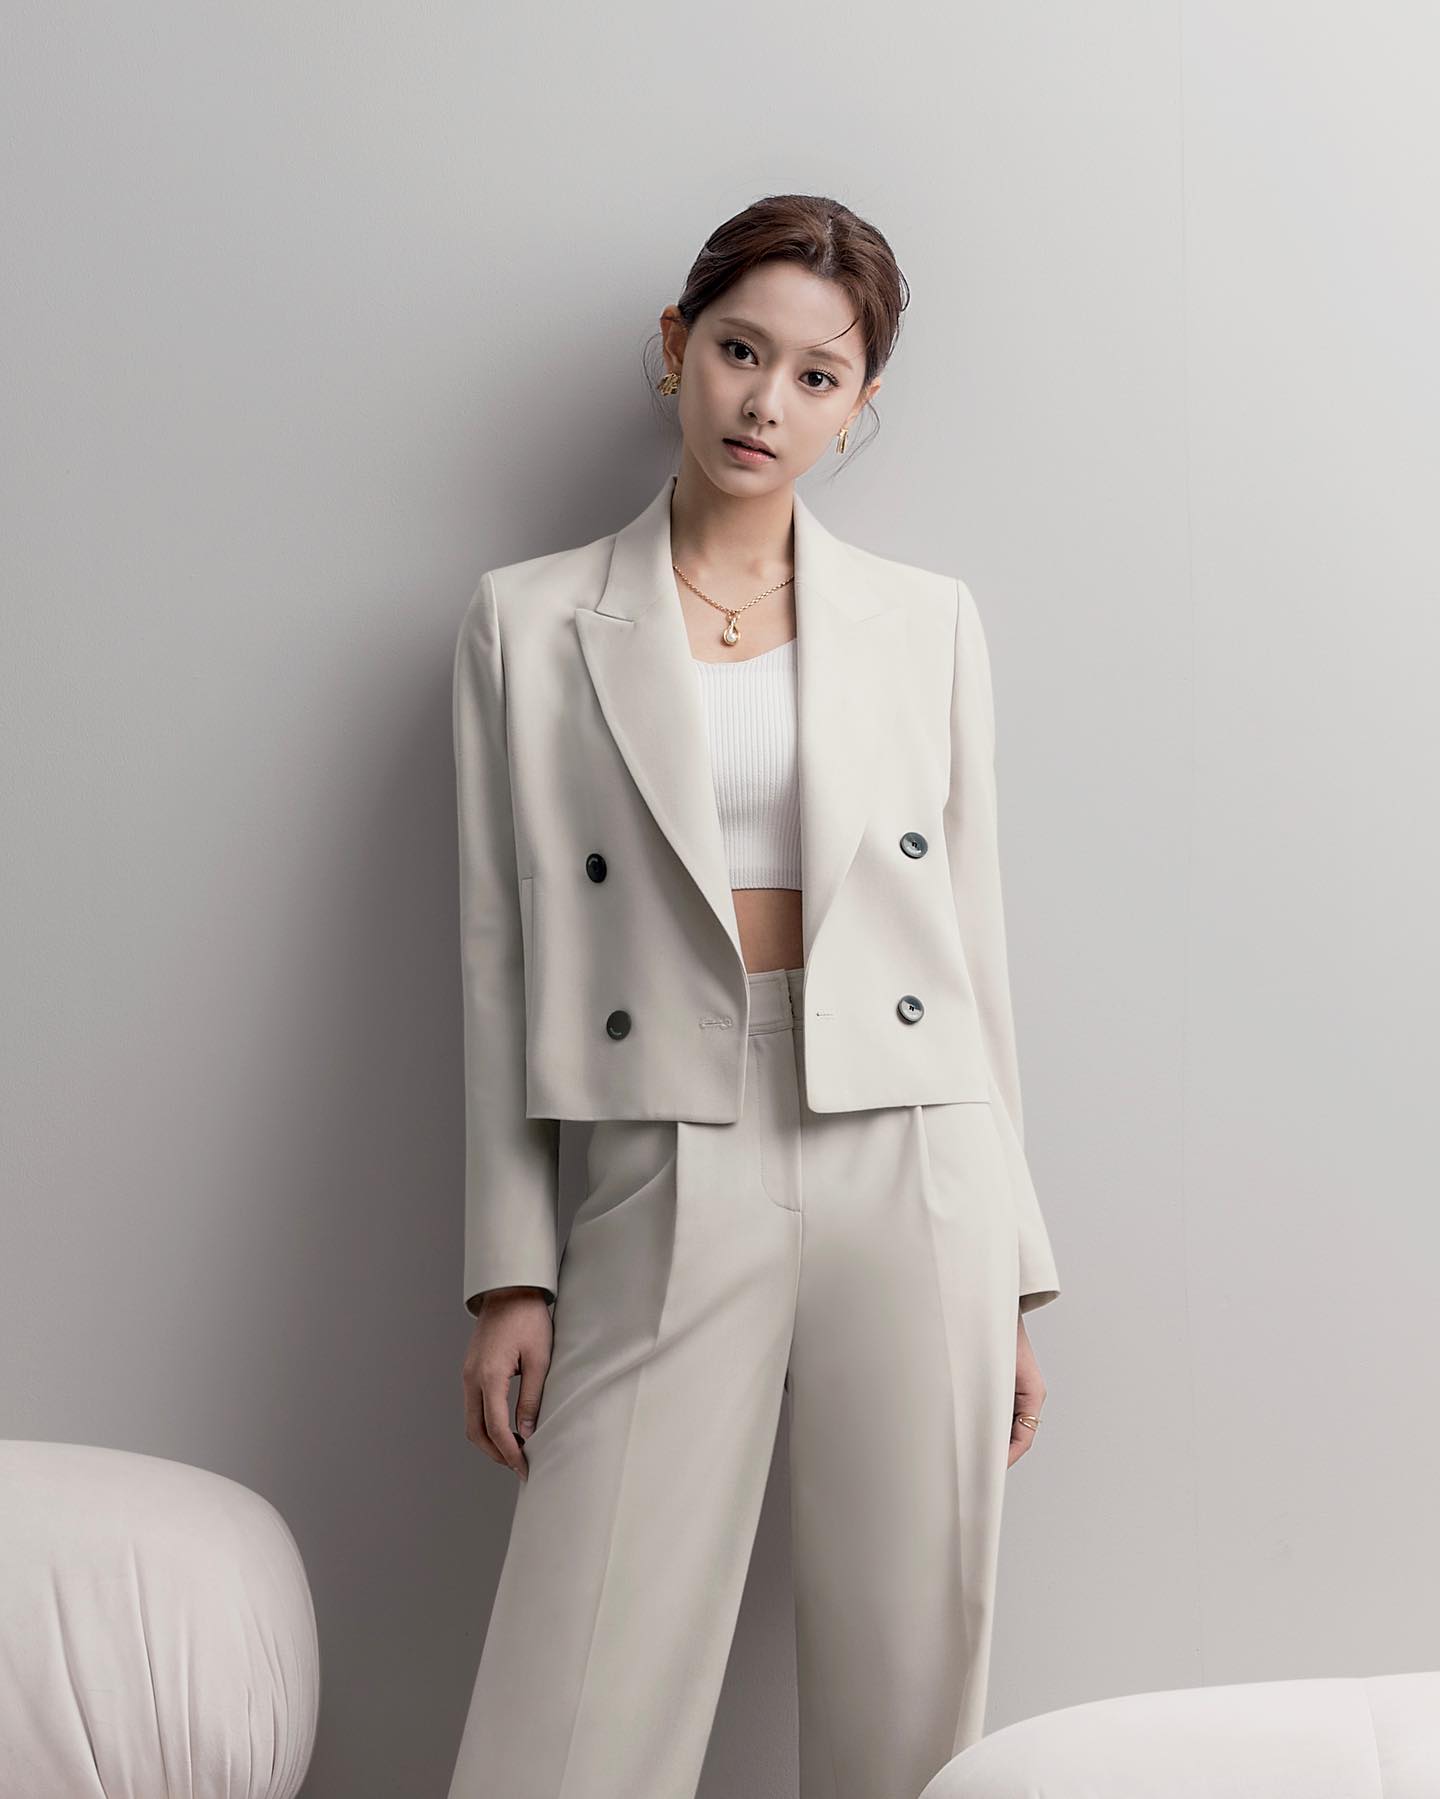 ZOOC x Tzuyu Cream-Colored-Woman-Wear-Suit.jpg